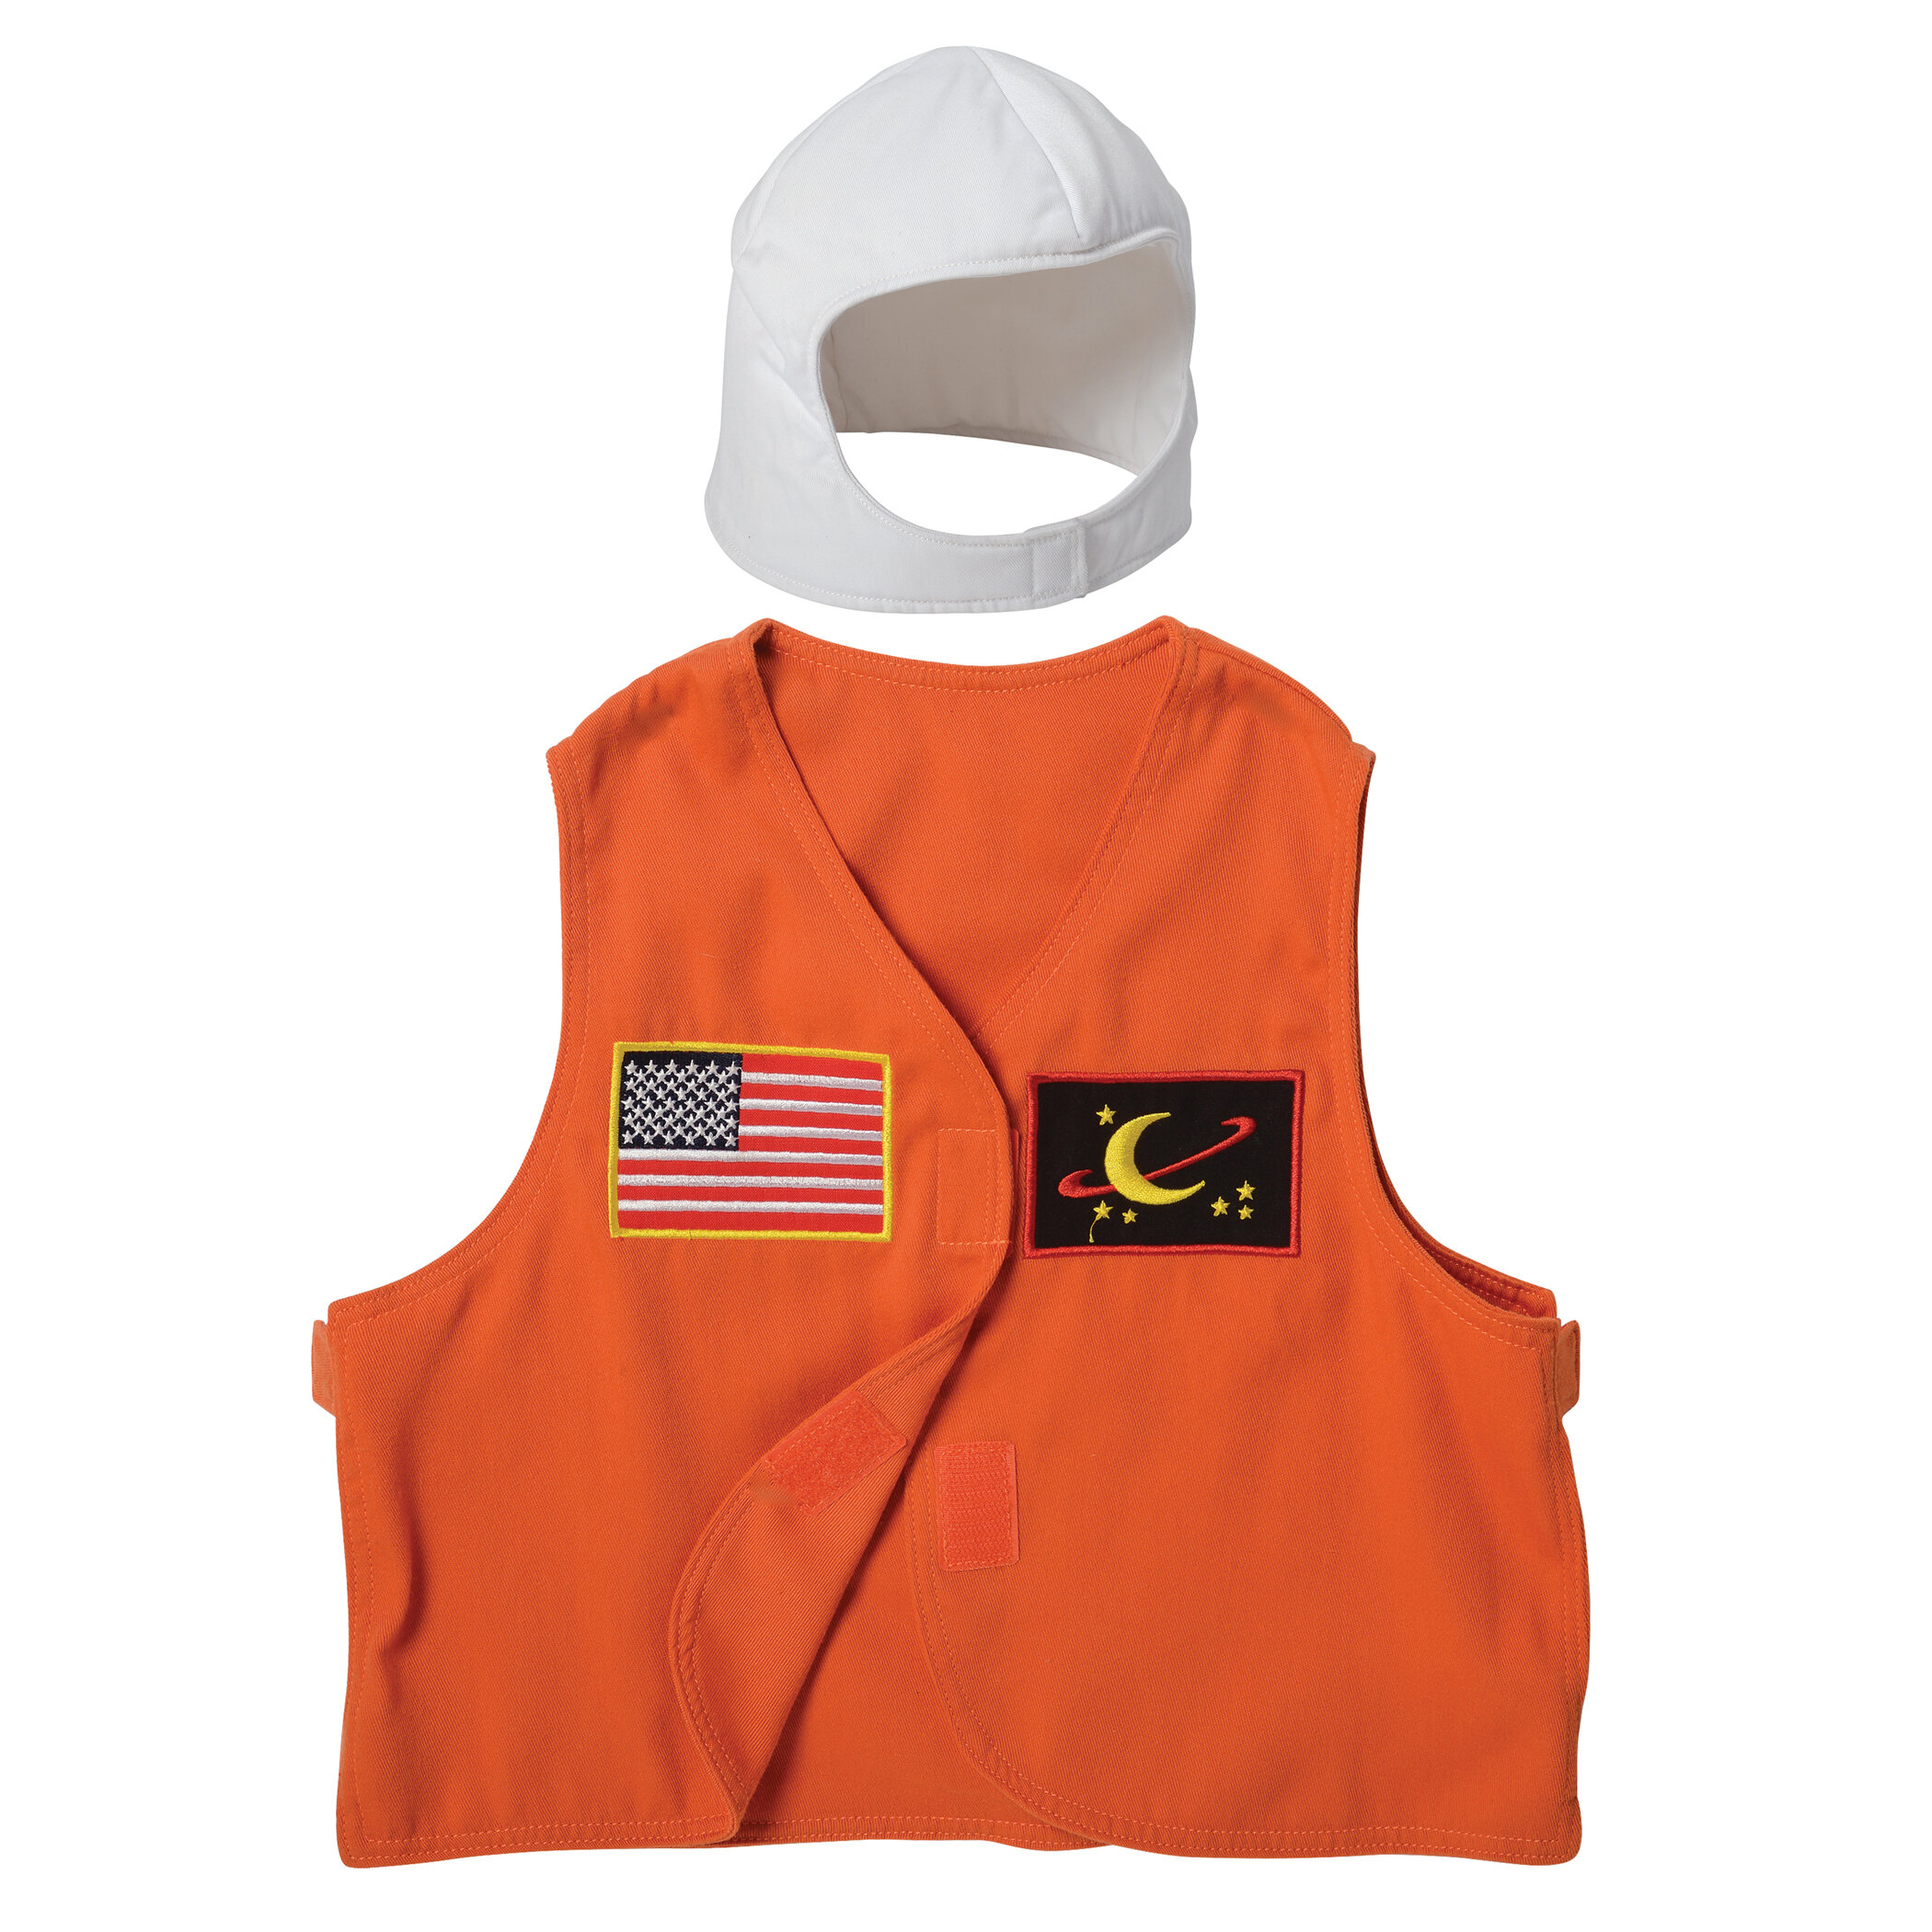 Cre8tive Minds Astronaut Toddler Dress-Up, Vest & Hat